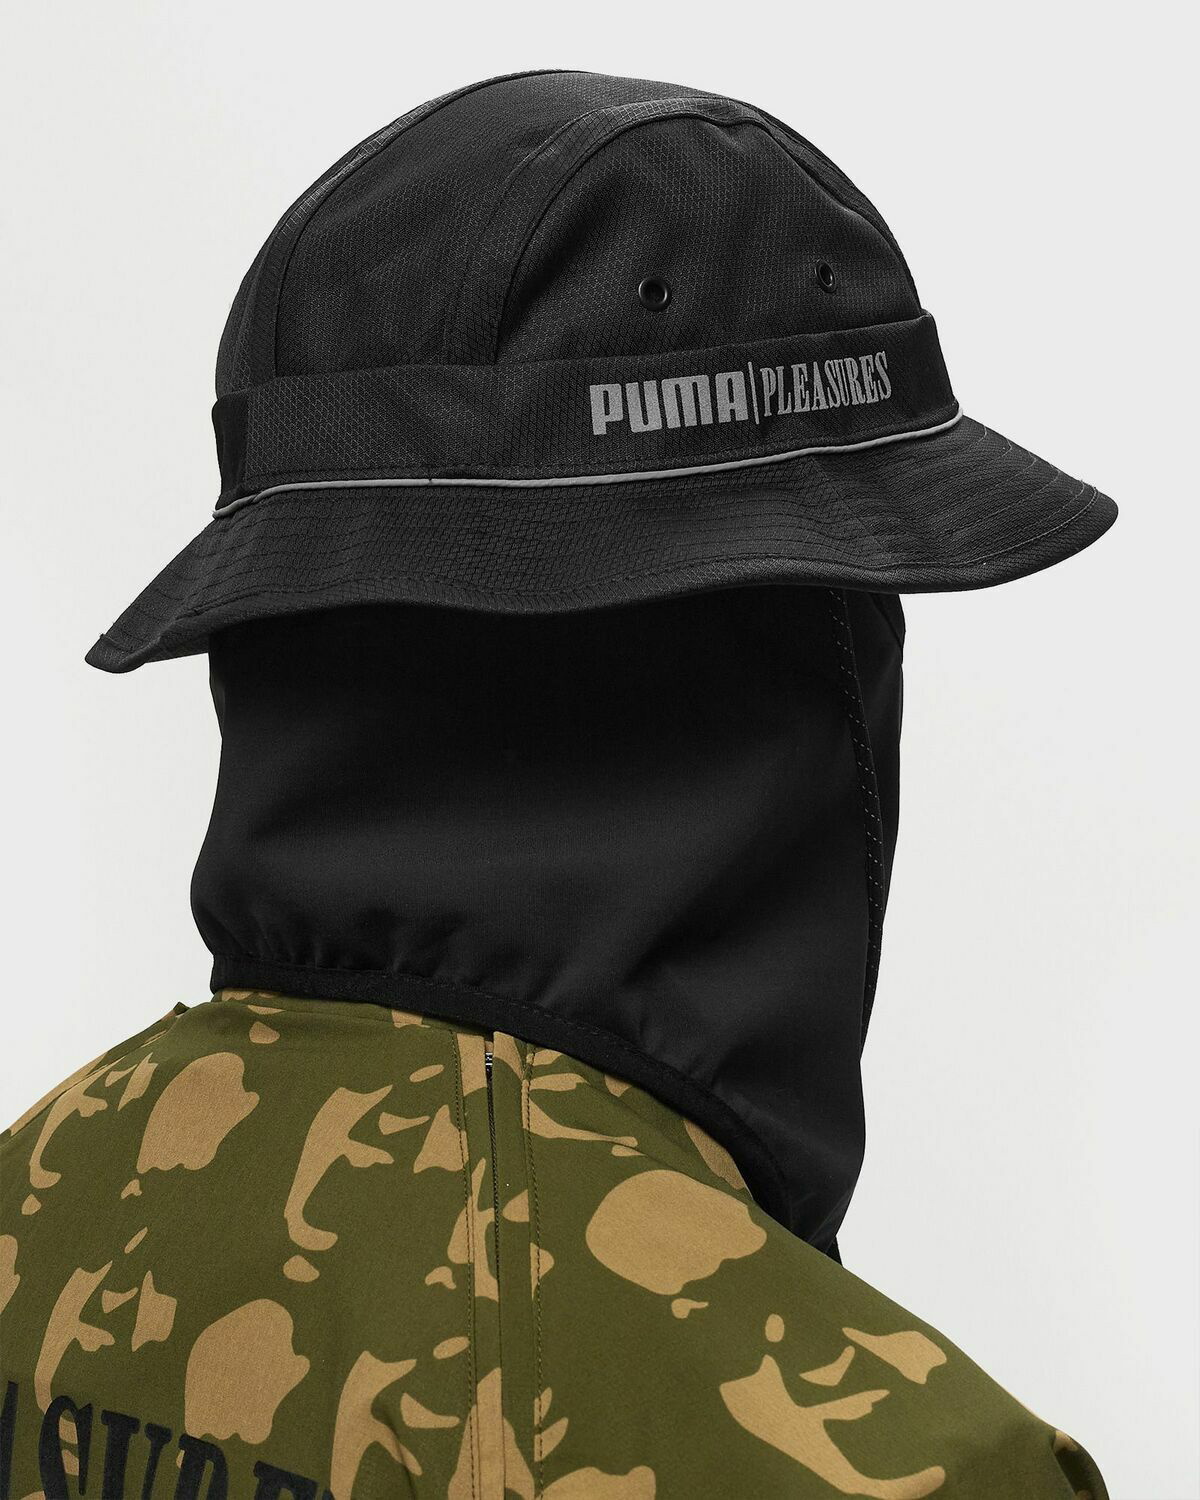 Puma Puma X Pleasures Masked Bucket Hat Black - Mens - Hats Puma